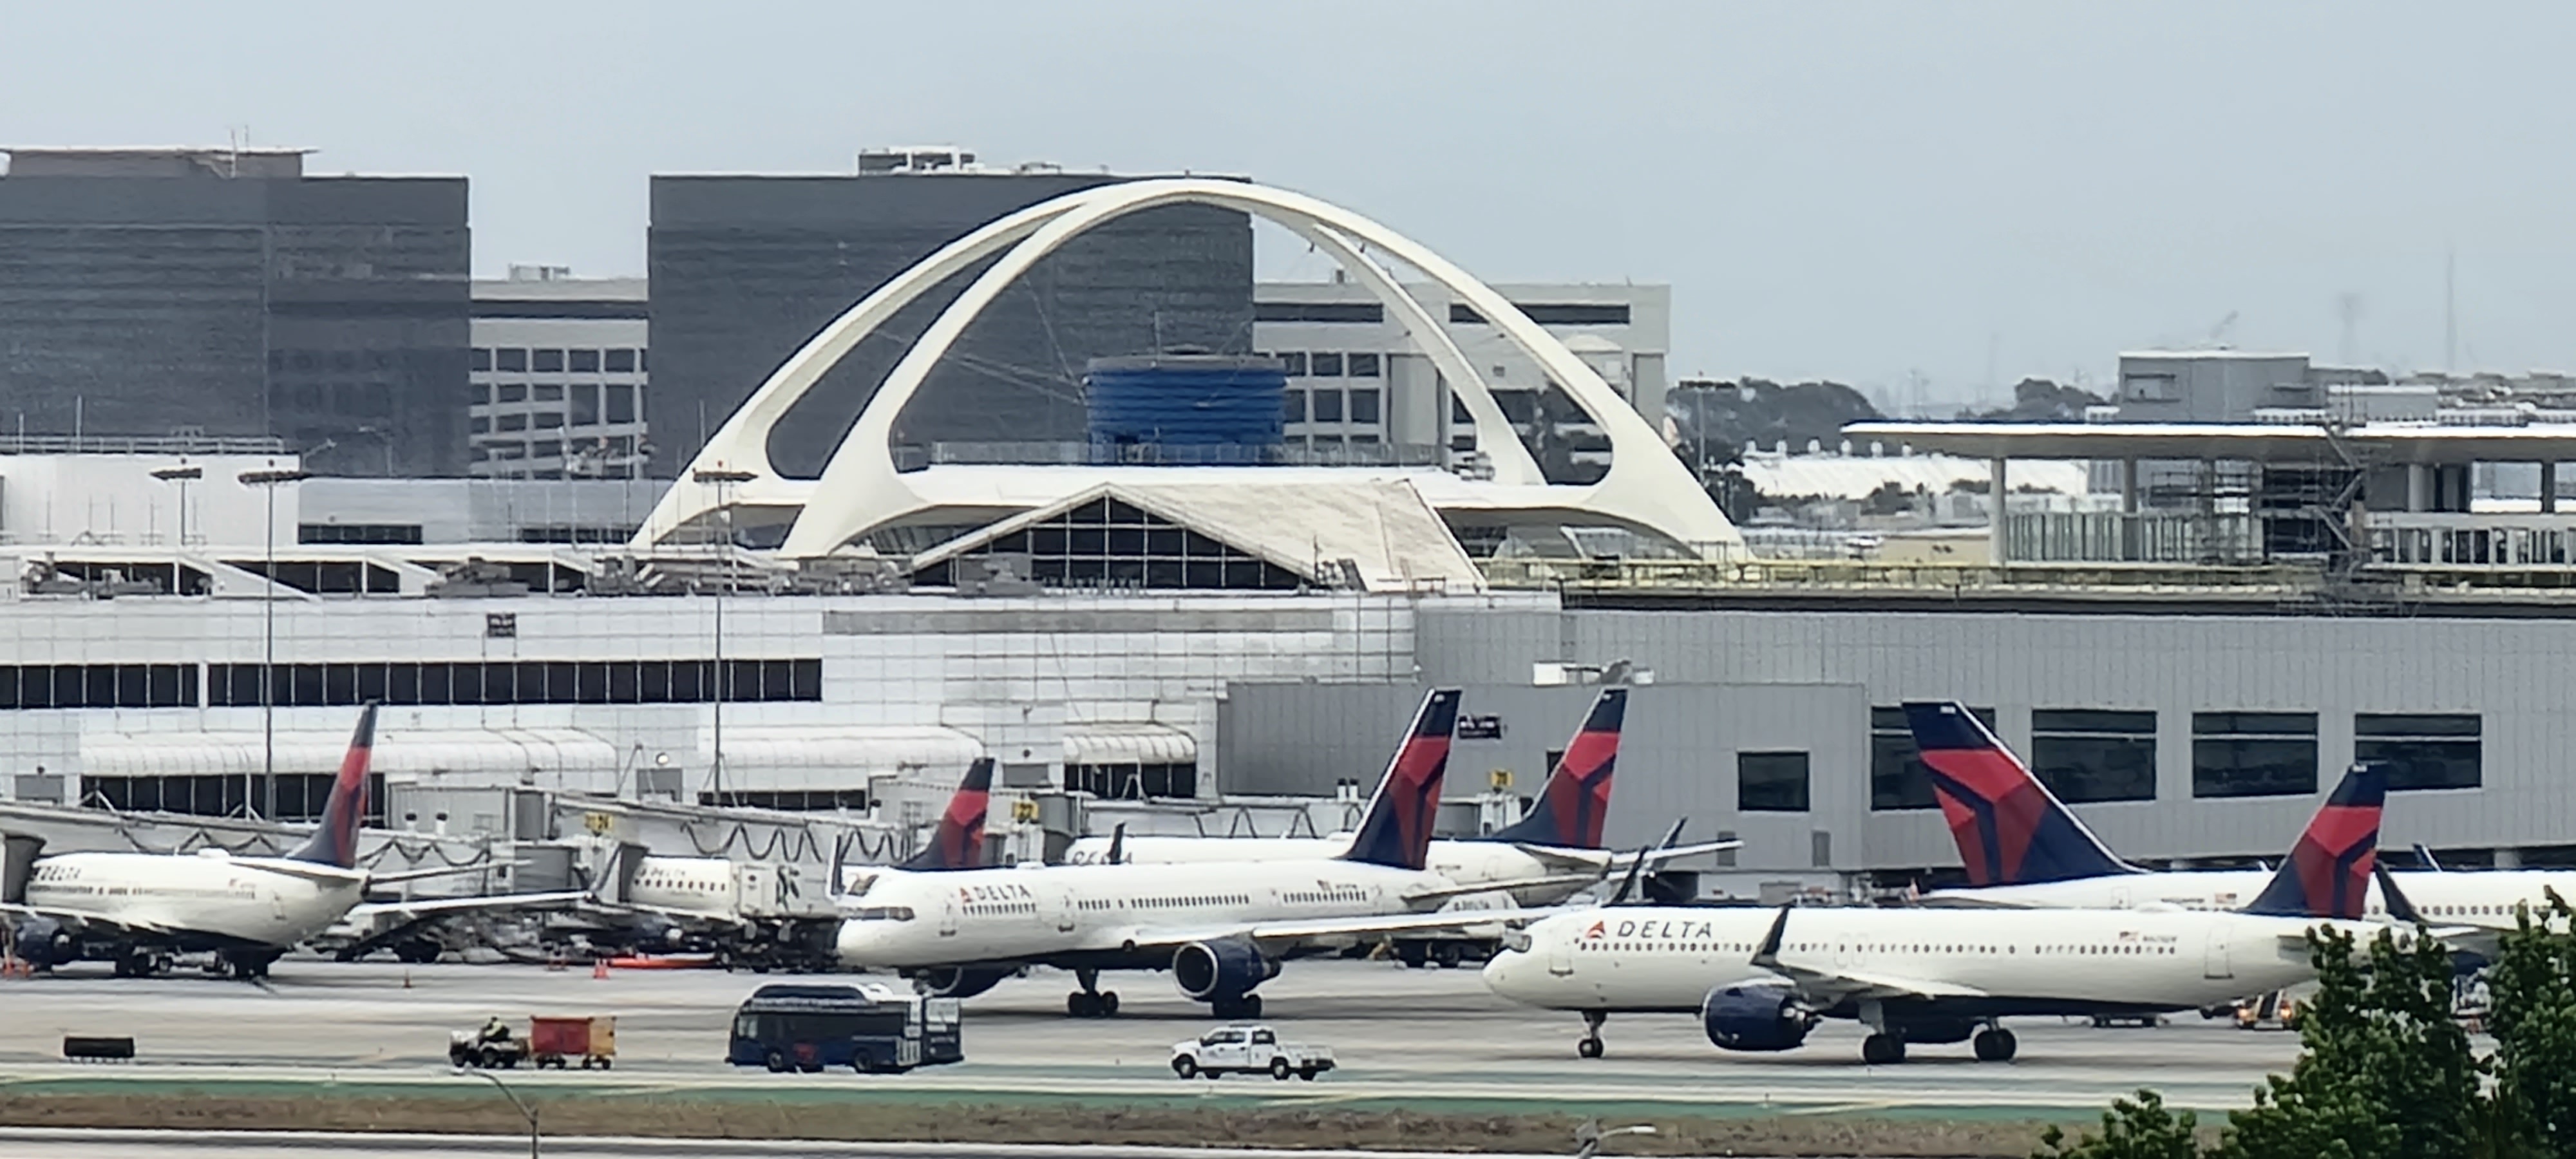 Crew on New York to Athens Flight Overlook Lewd Behavior of Delta Business Class Passenger